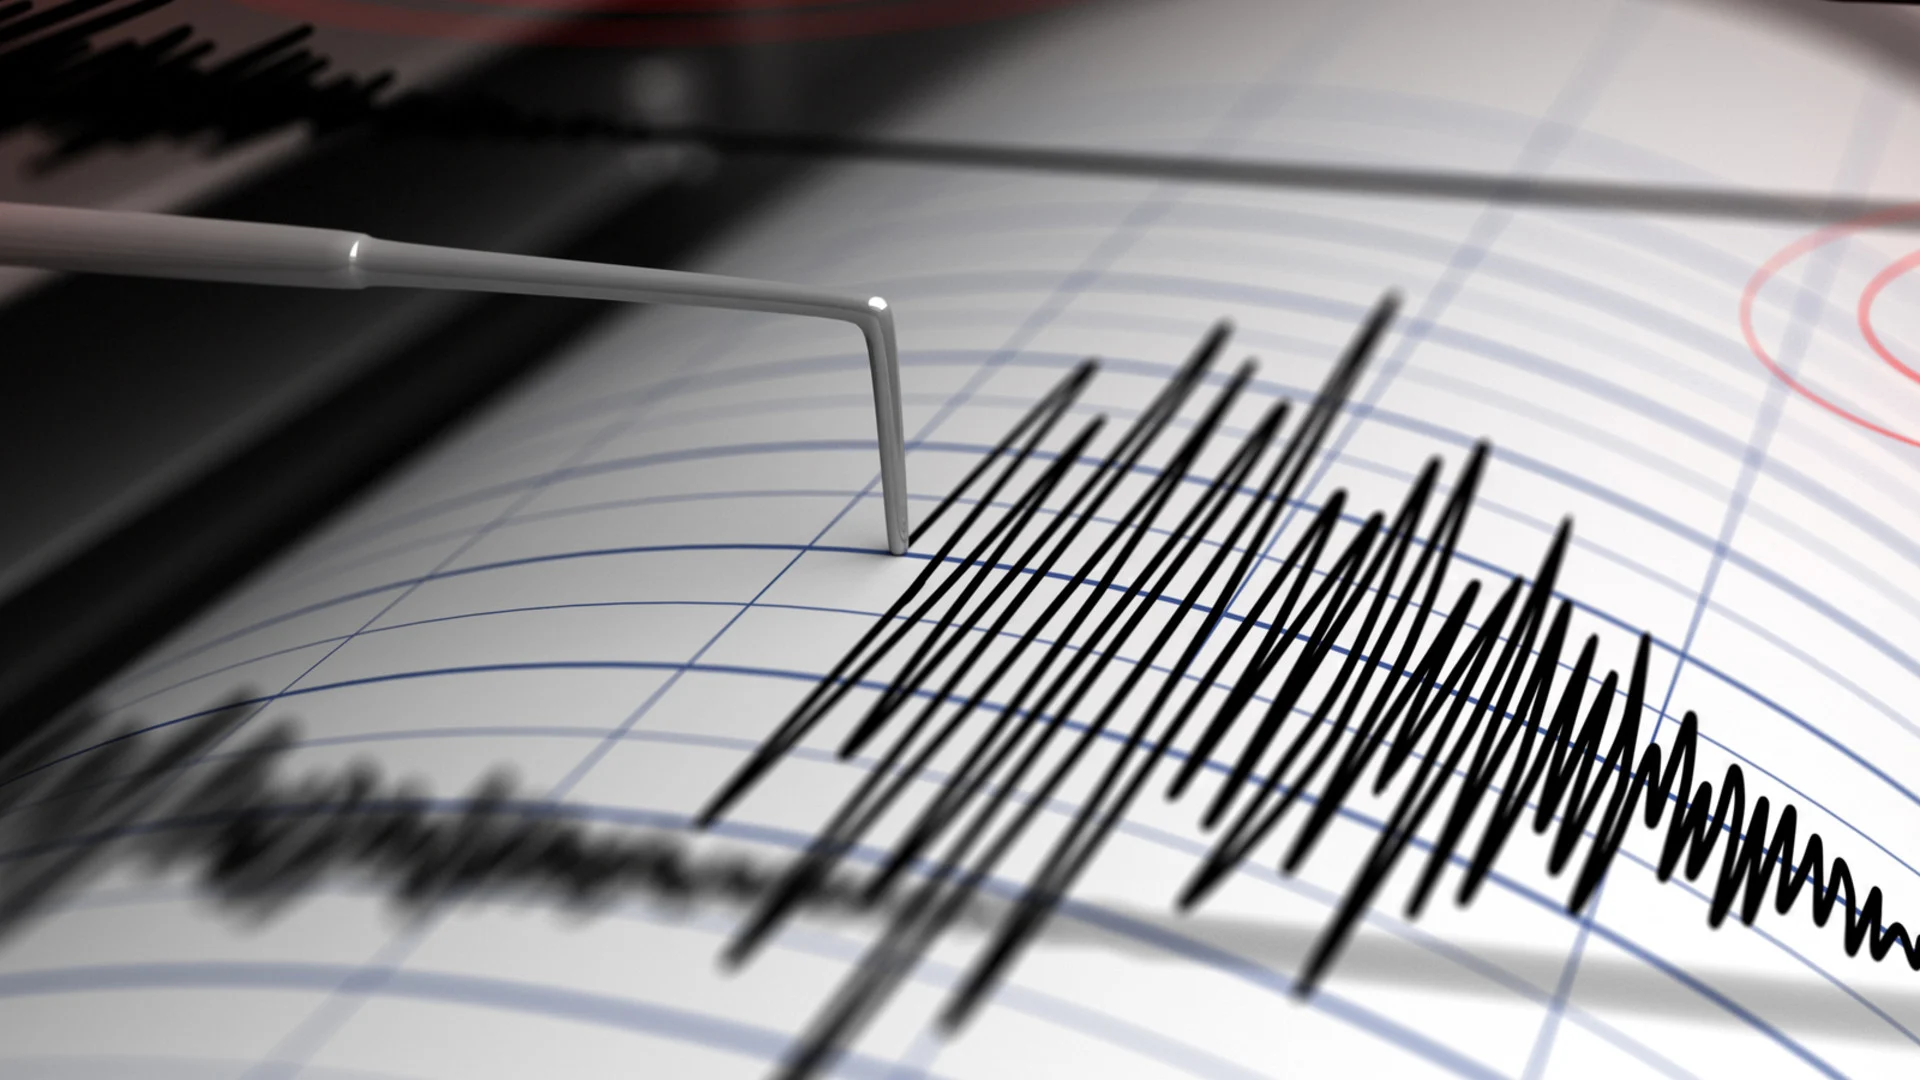 7.3 magnitude earthquake strikes Tonga region, tsunami warning briefly issued